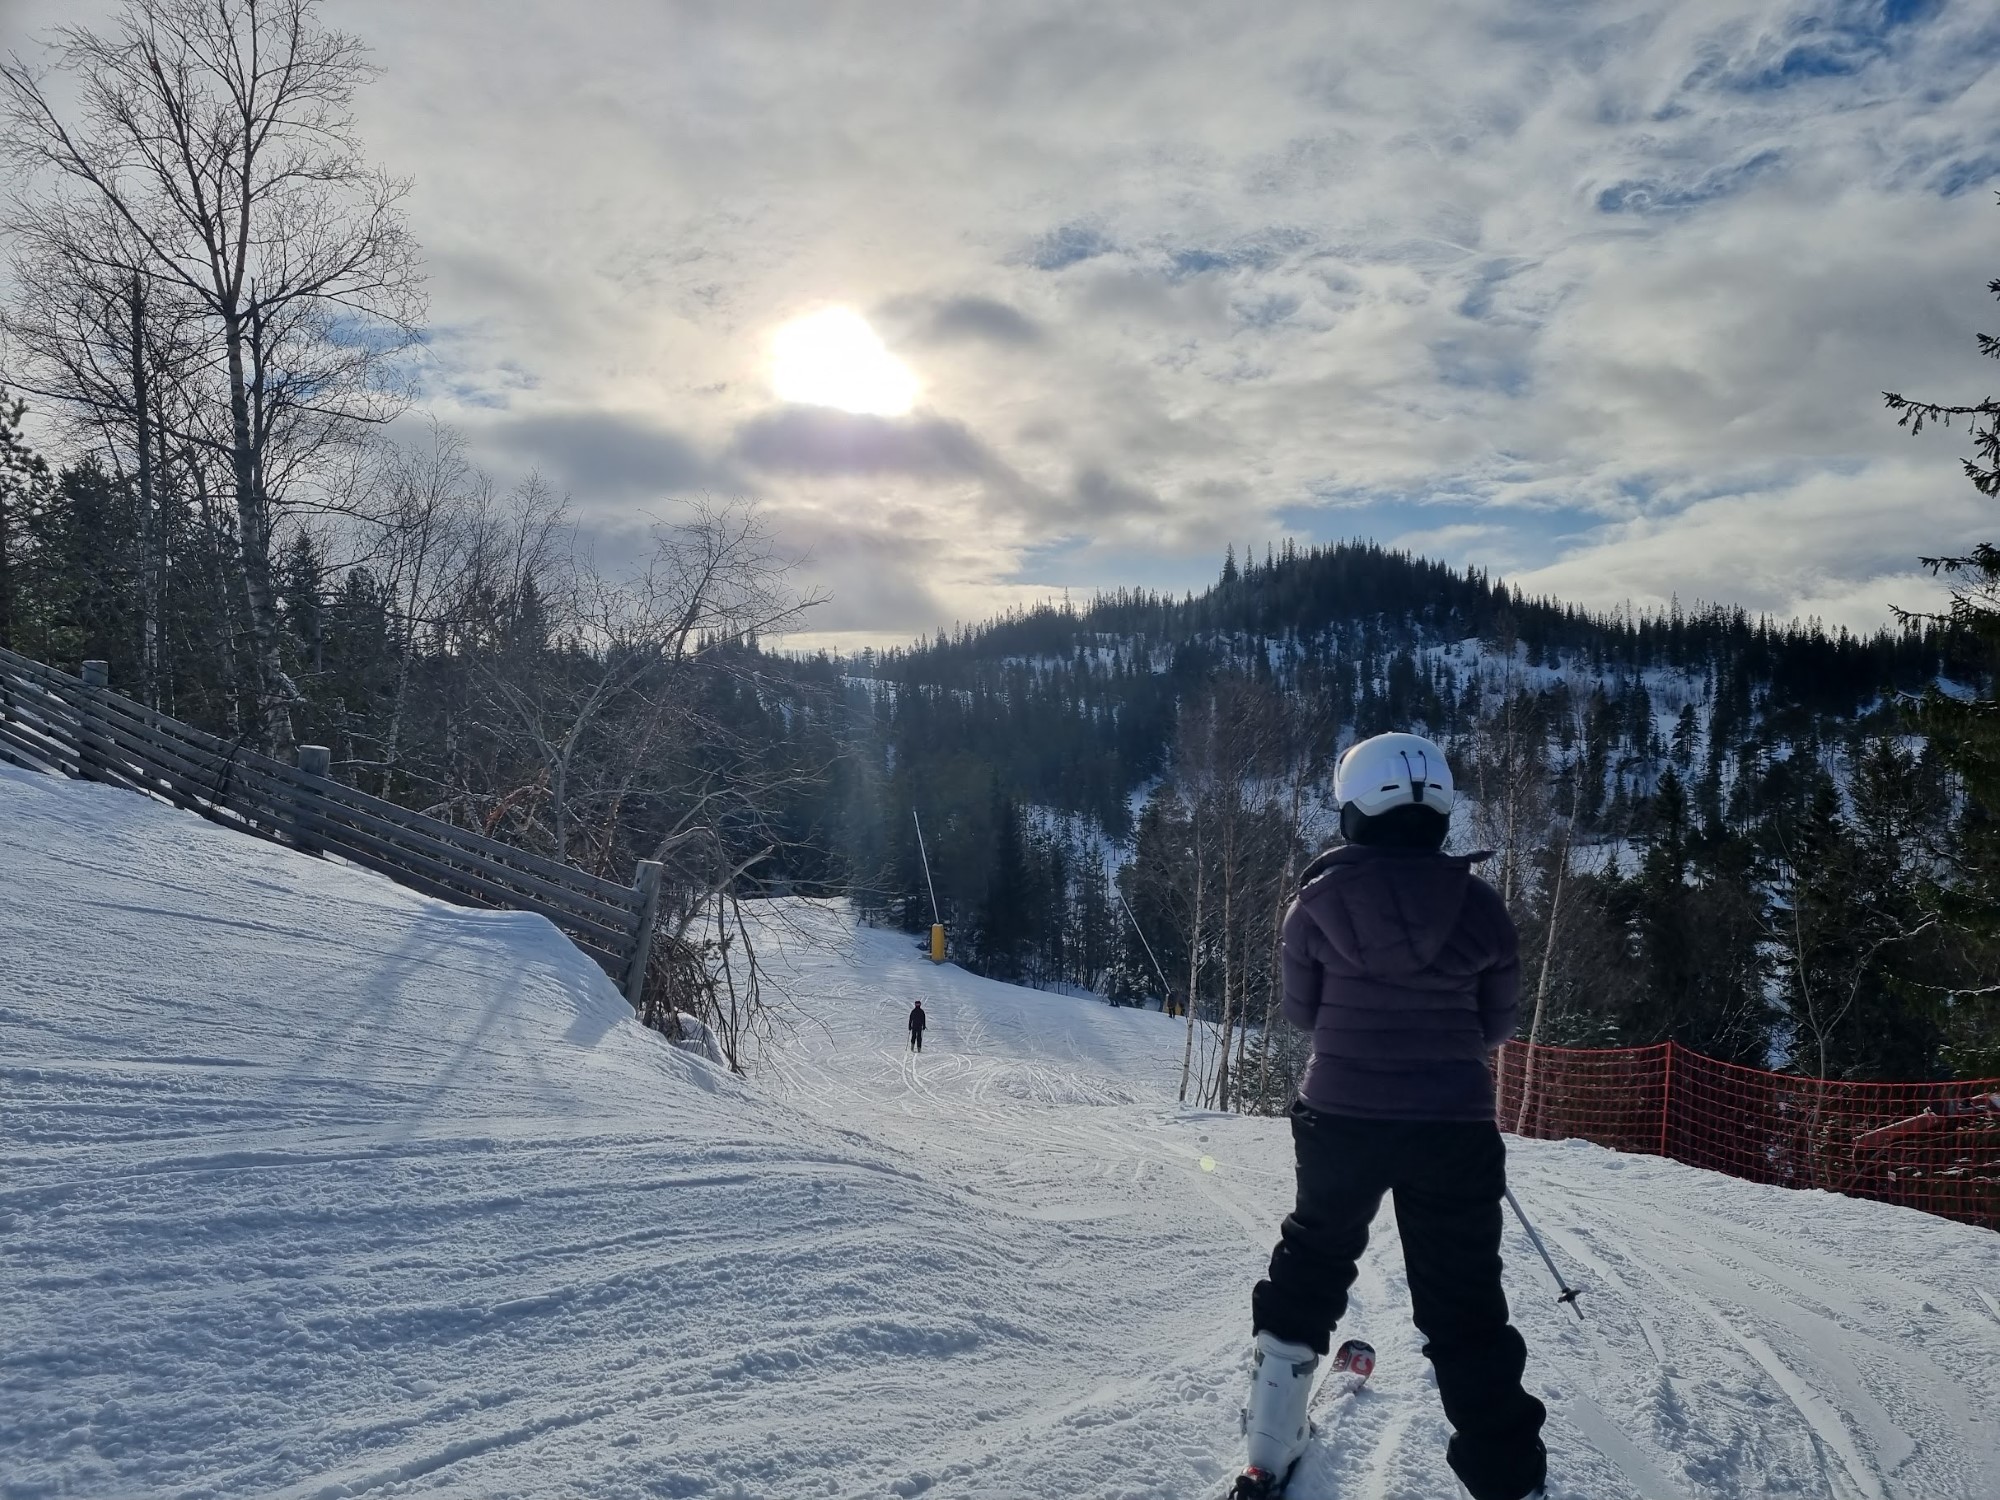 Jente står på ski i slalombakke